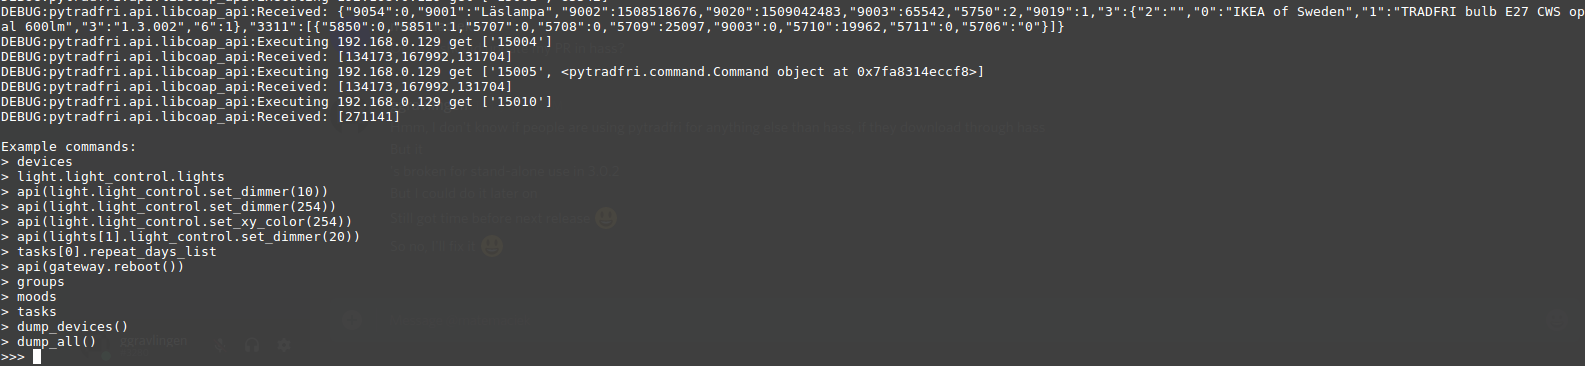 Screenshot of command line interface